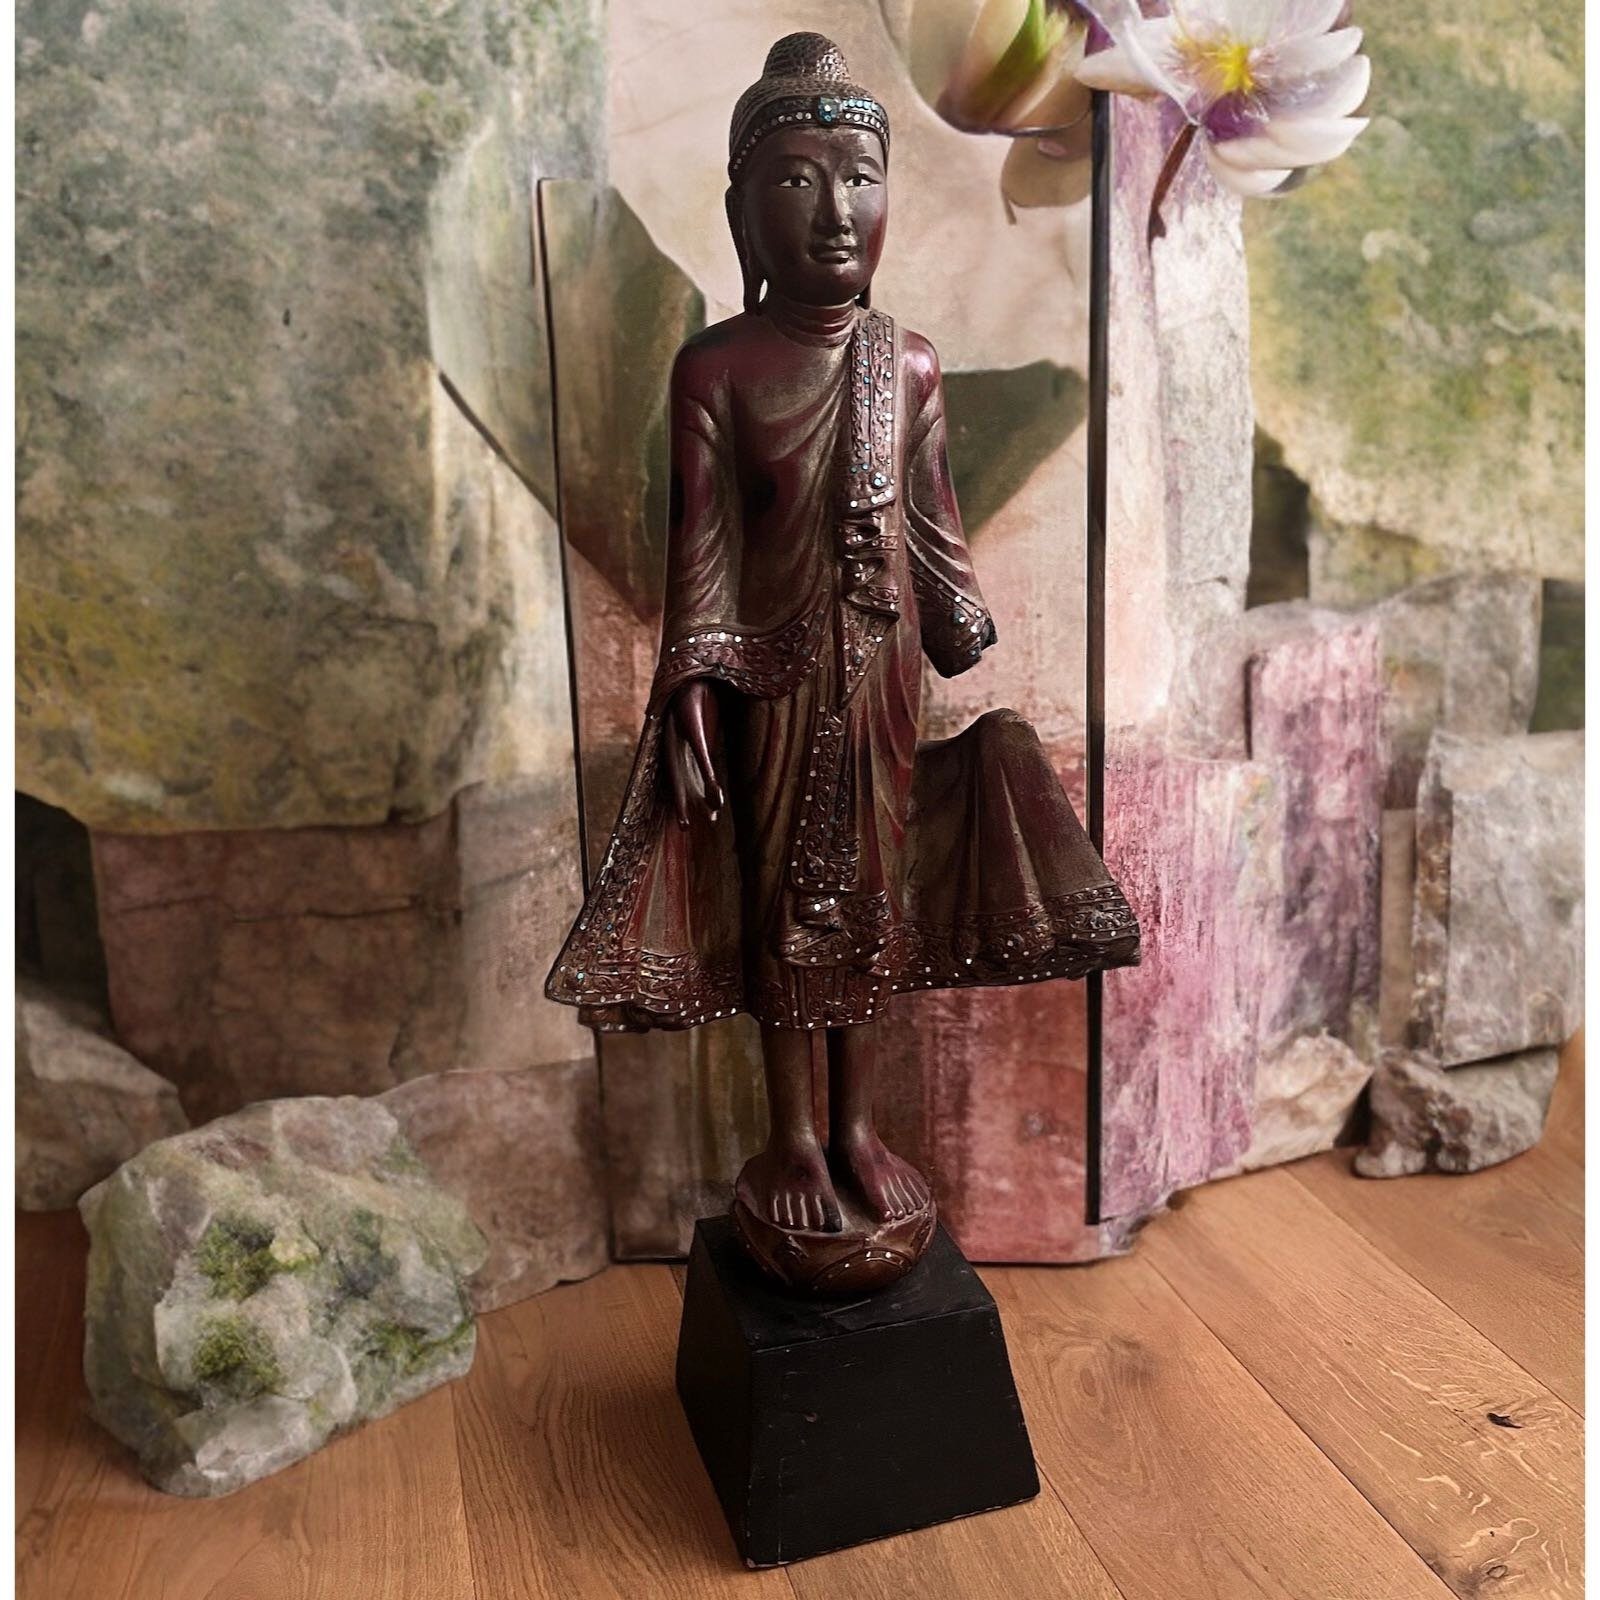 Holz - - Figur Asien Buddha stehend LifeStyle Thailand Rot Buddhafigur Burma,